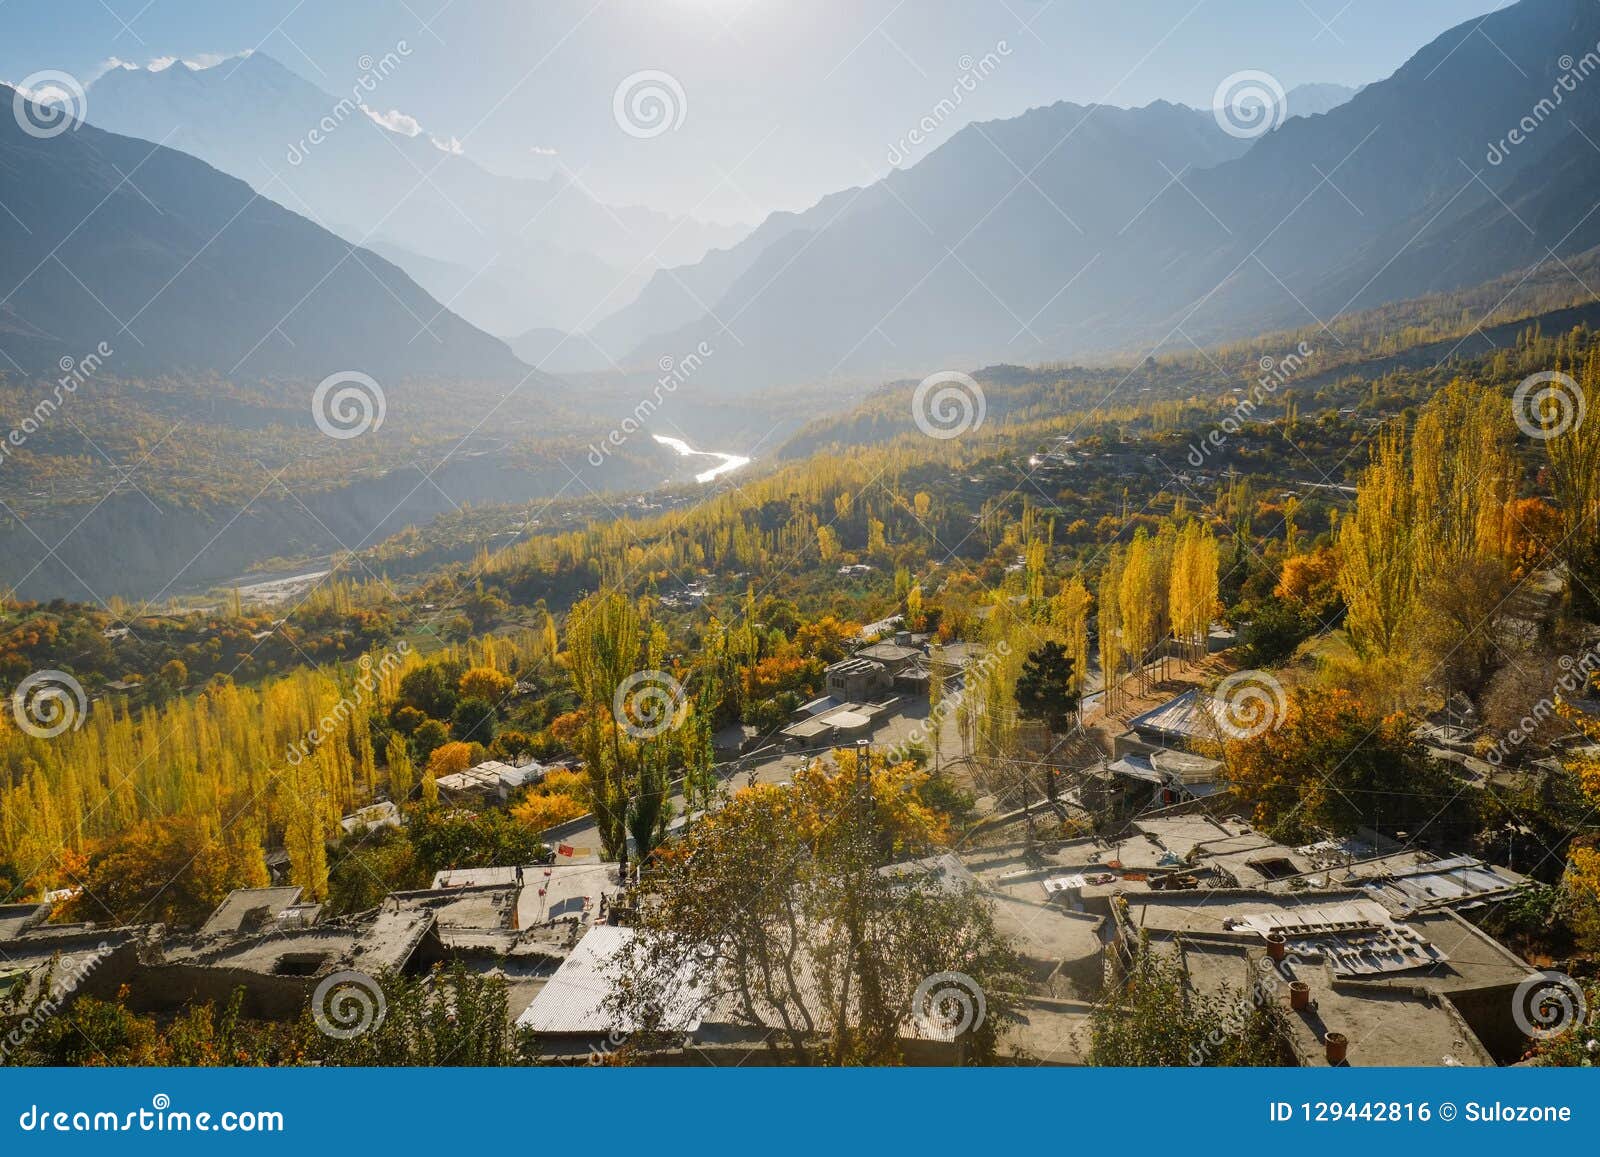 landscape view of autumn in hunza valley, gilgit-baltistan, pakistan.